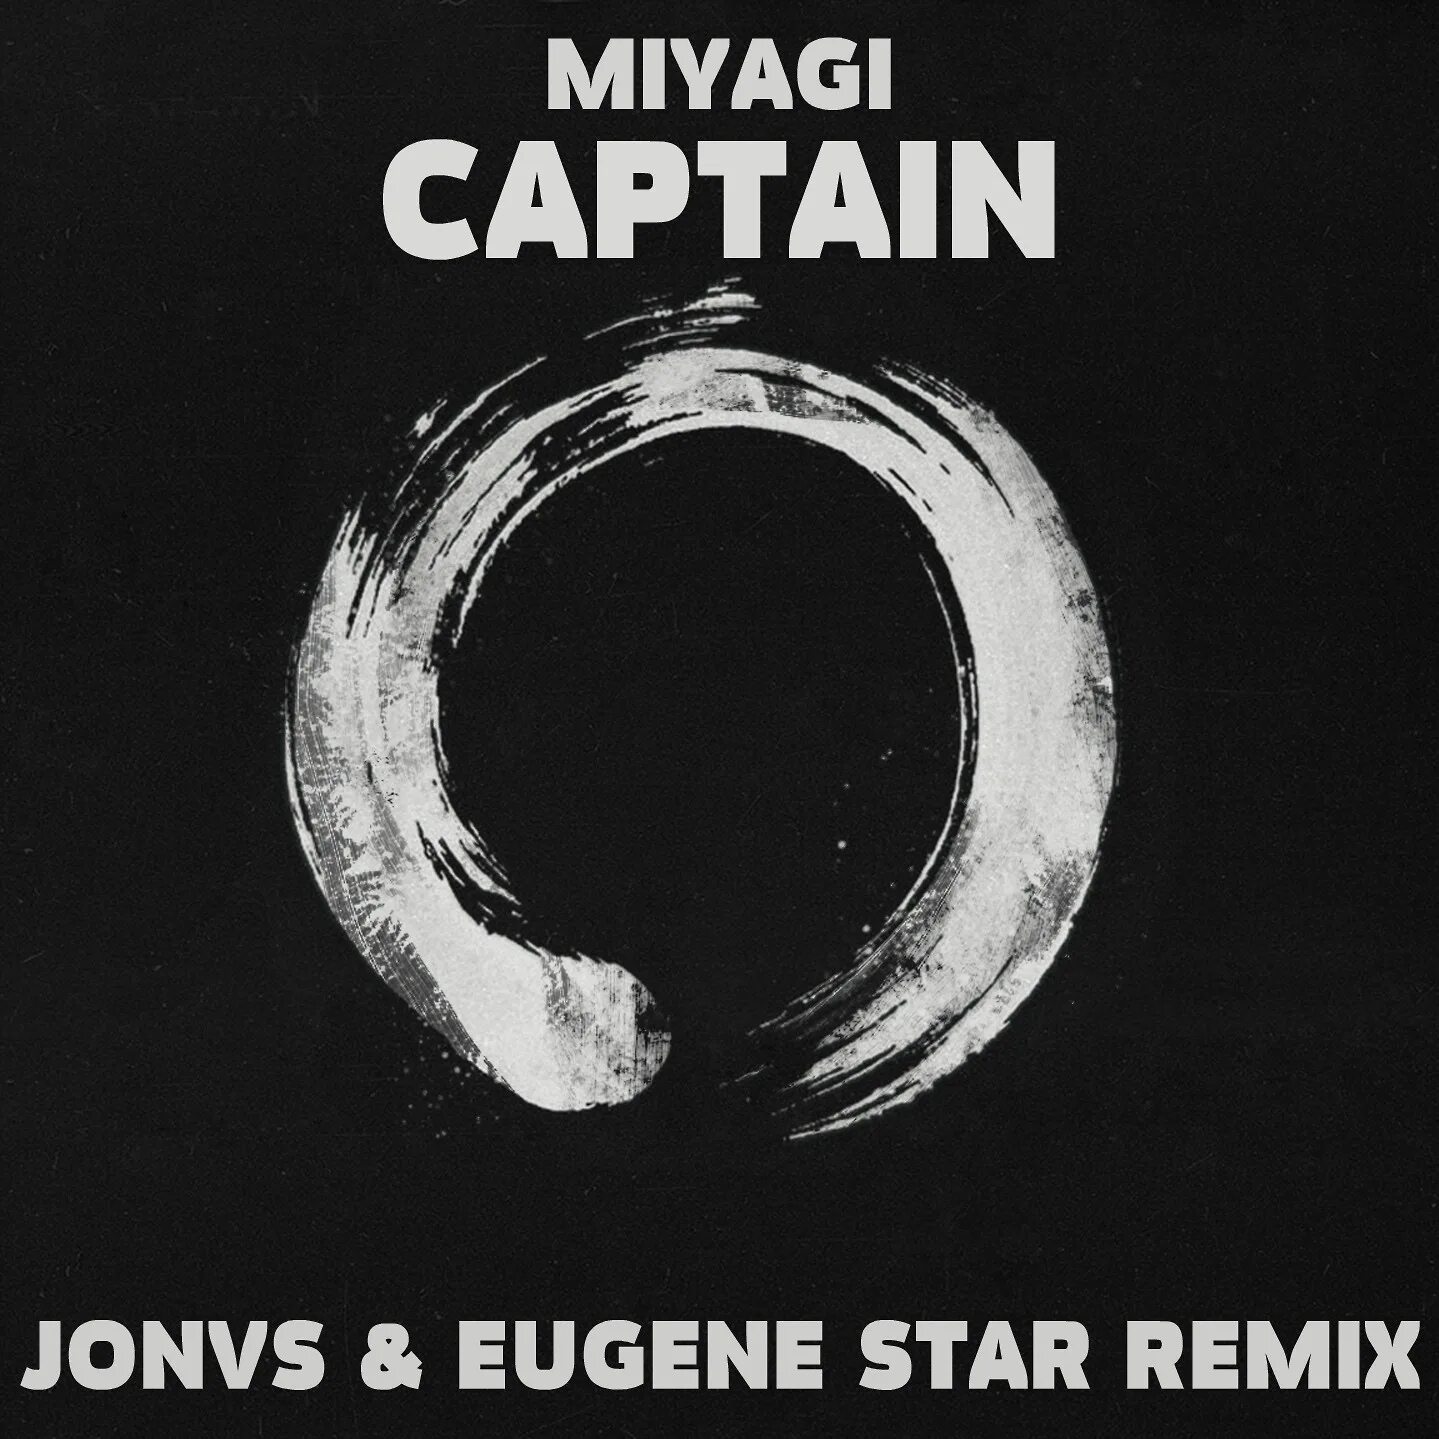 Обложка трека Miyagi. Обложка альбома Капитан мияги. Мияги Капитан обложка трека.